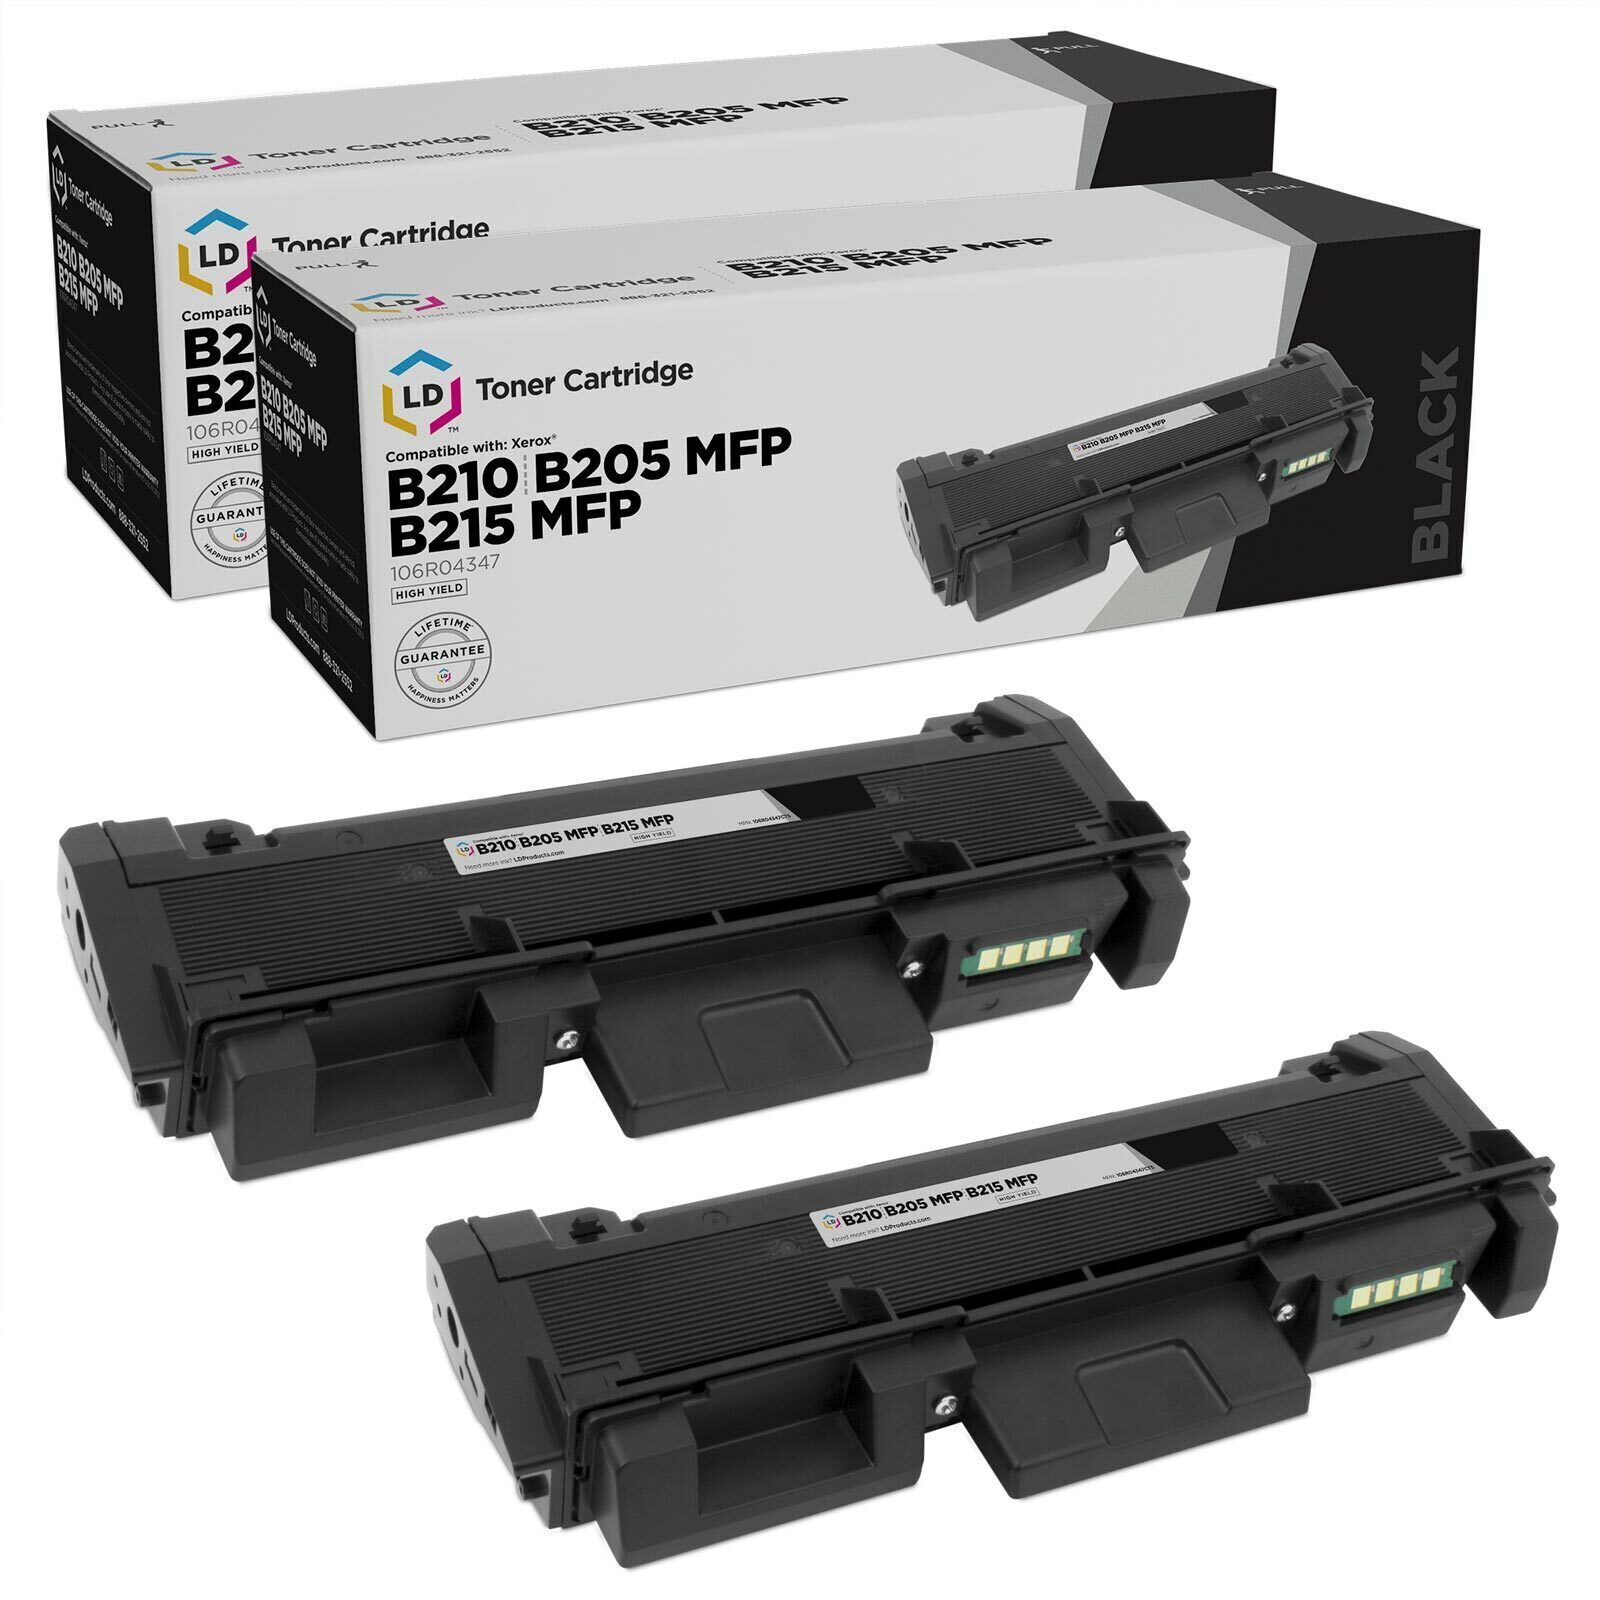 LD Compatible Xerox 106R04347 HY Black Toner Cartridge 2PK for B205, B210, B215